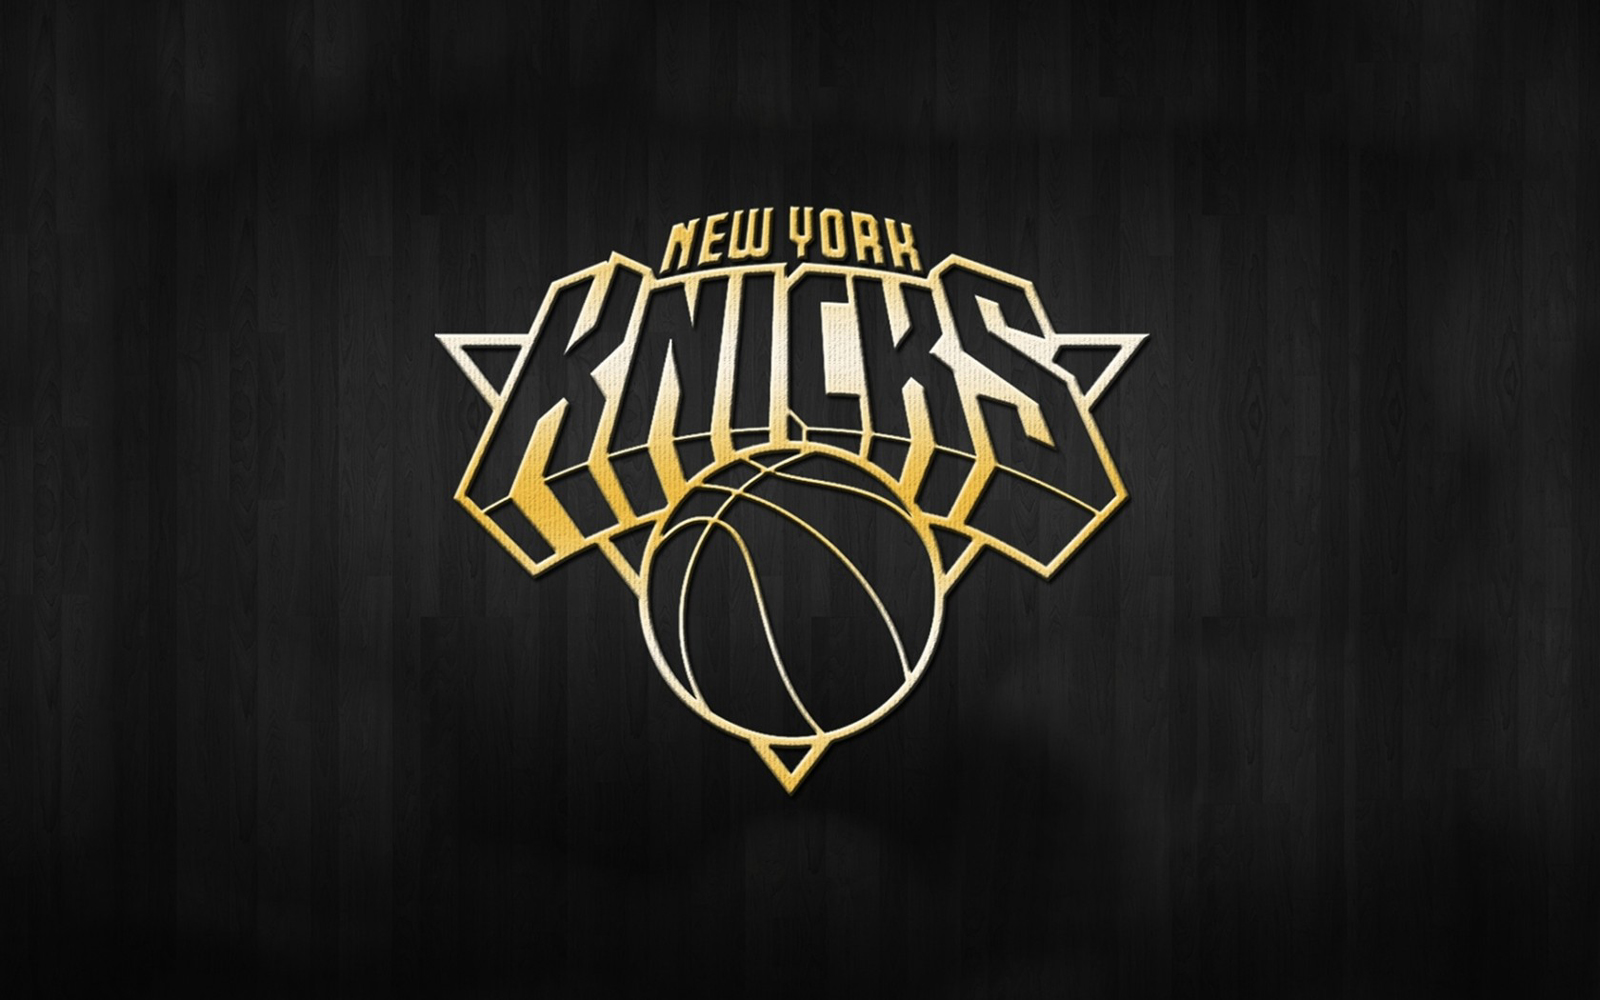 https://blogger.googleusercontent.com/img/b/R29vZ2xl/AVvXsEiPGH4cA5RMLNOYHWixVwuJQ7Md7GKPhv02lDE9rKDzrnZESj2qR8dJKNhJJlS6sYBLAfgz3ZUXj4MuDvnnxCs4ZKjVa88ukKvS8HIYhQbQ0UuLgXfWKVYSS0m9ctqz2PvsFFC4D52wRvM/s1600/New_York_Knicks_2013_Logo_NBA_USA_Hd_Desktop_Wallpaper_citiesandteams.blogspot.com.jpg